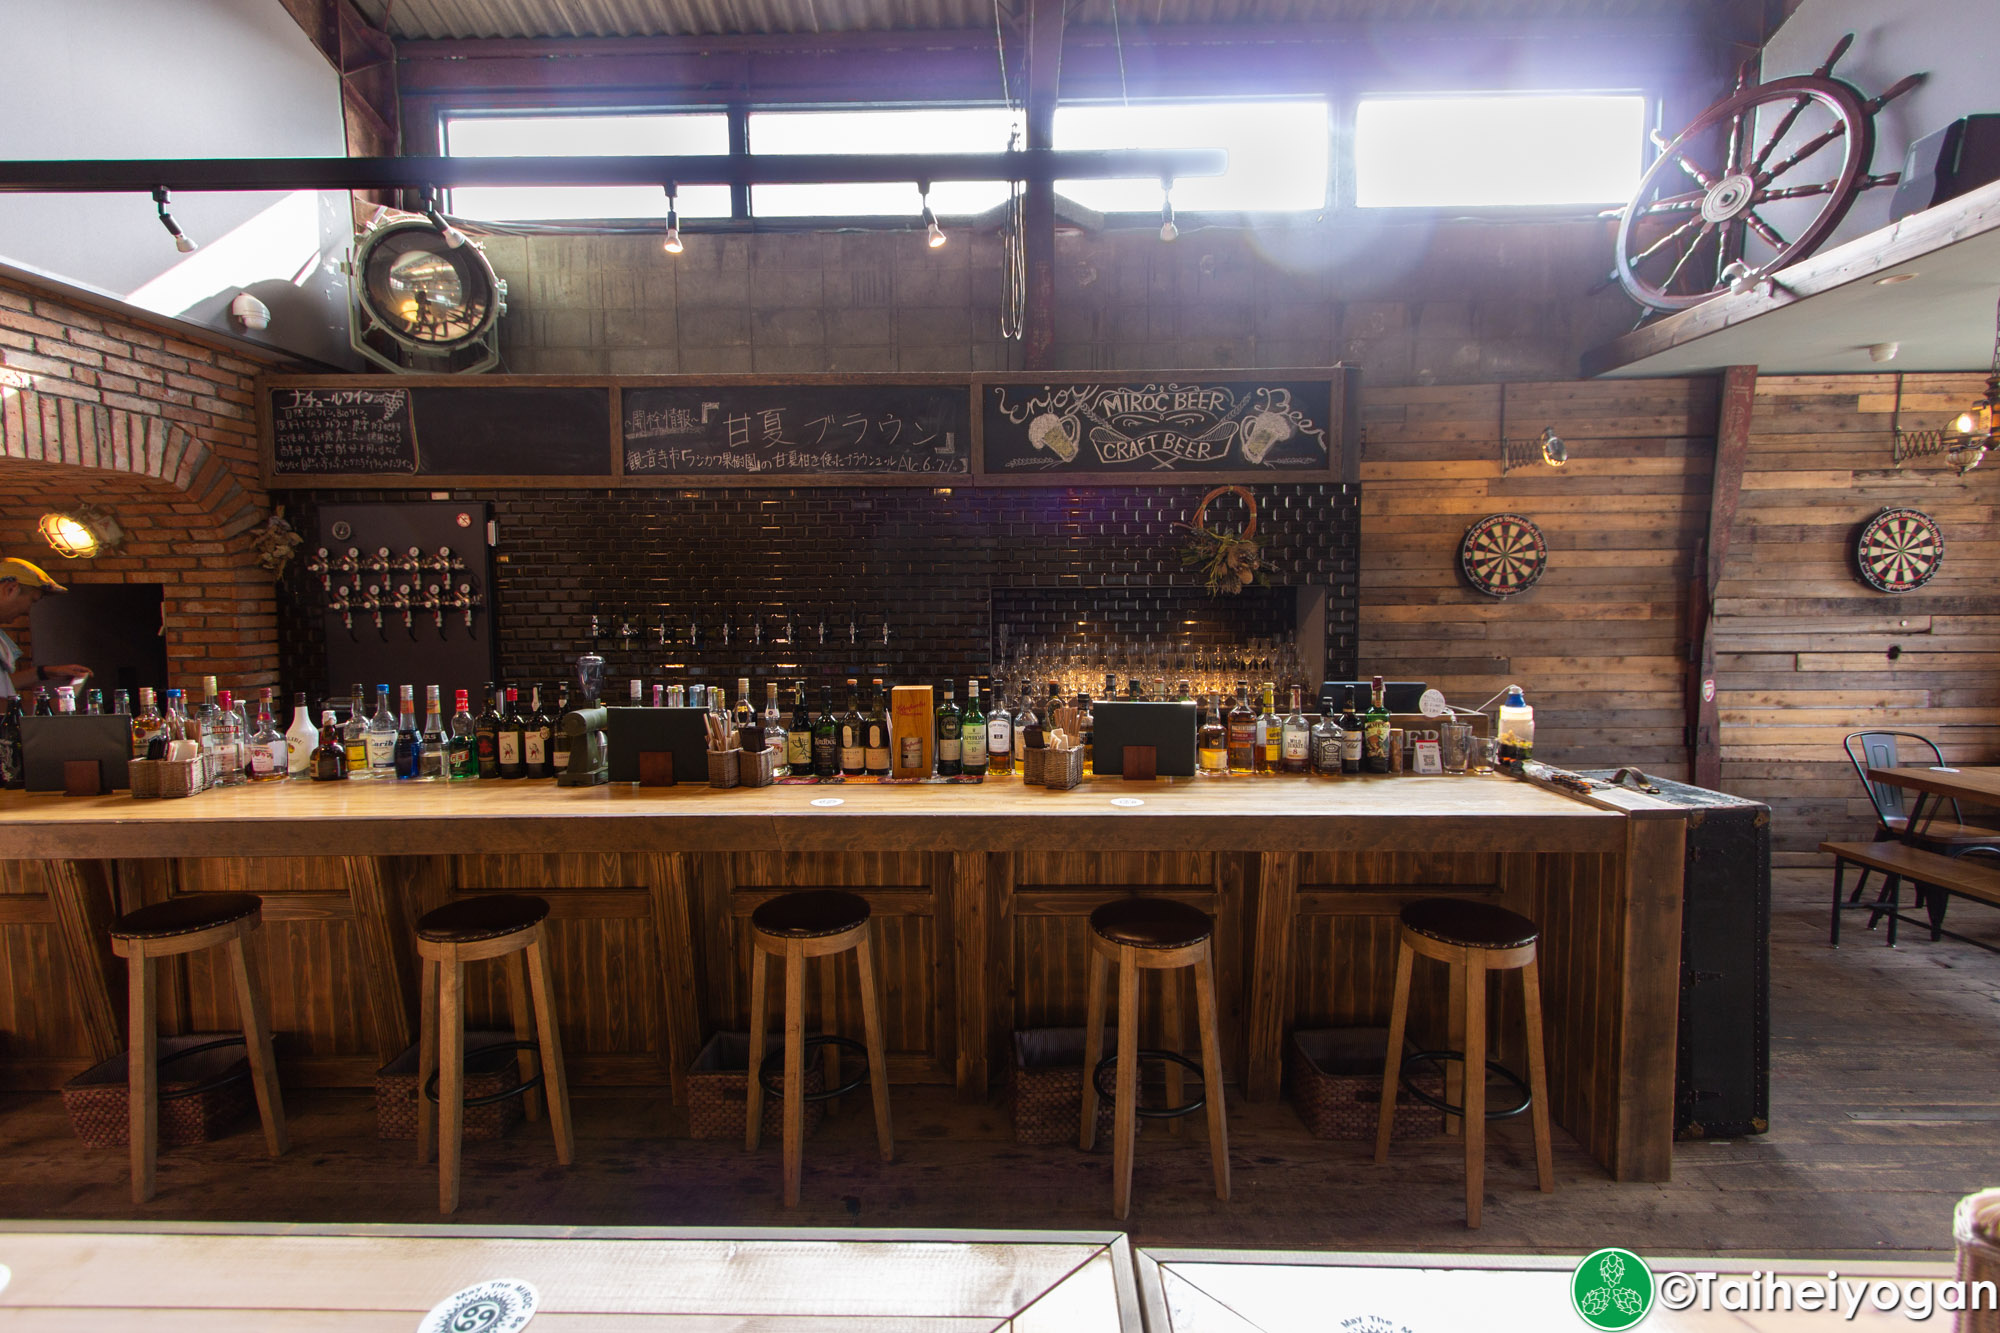 Miroc Beer - Interior - Bar Counter